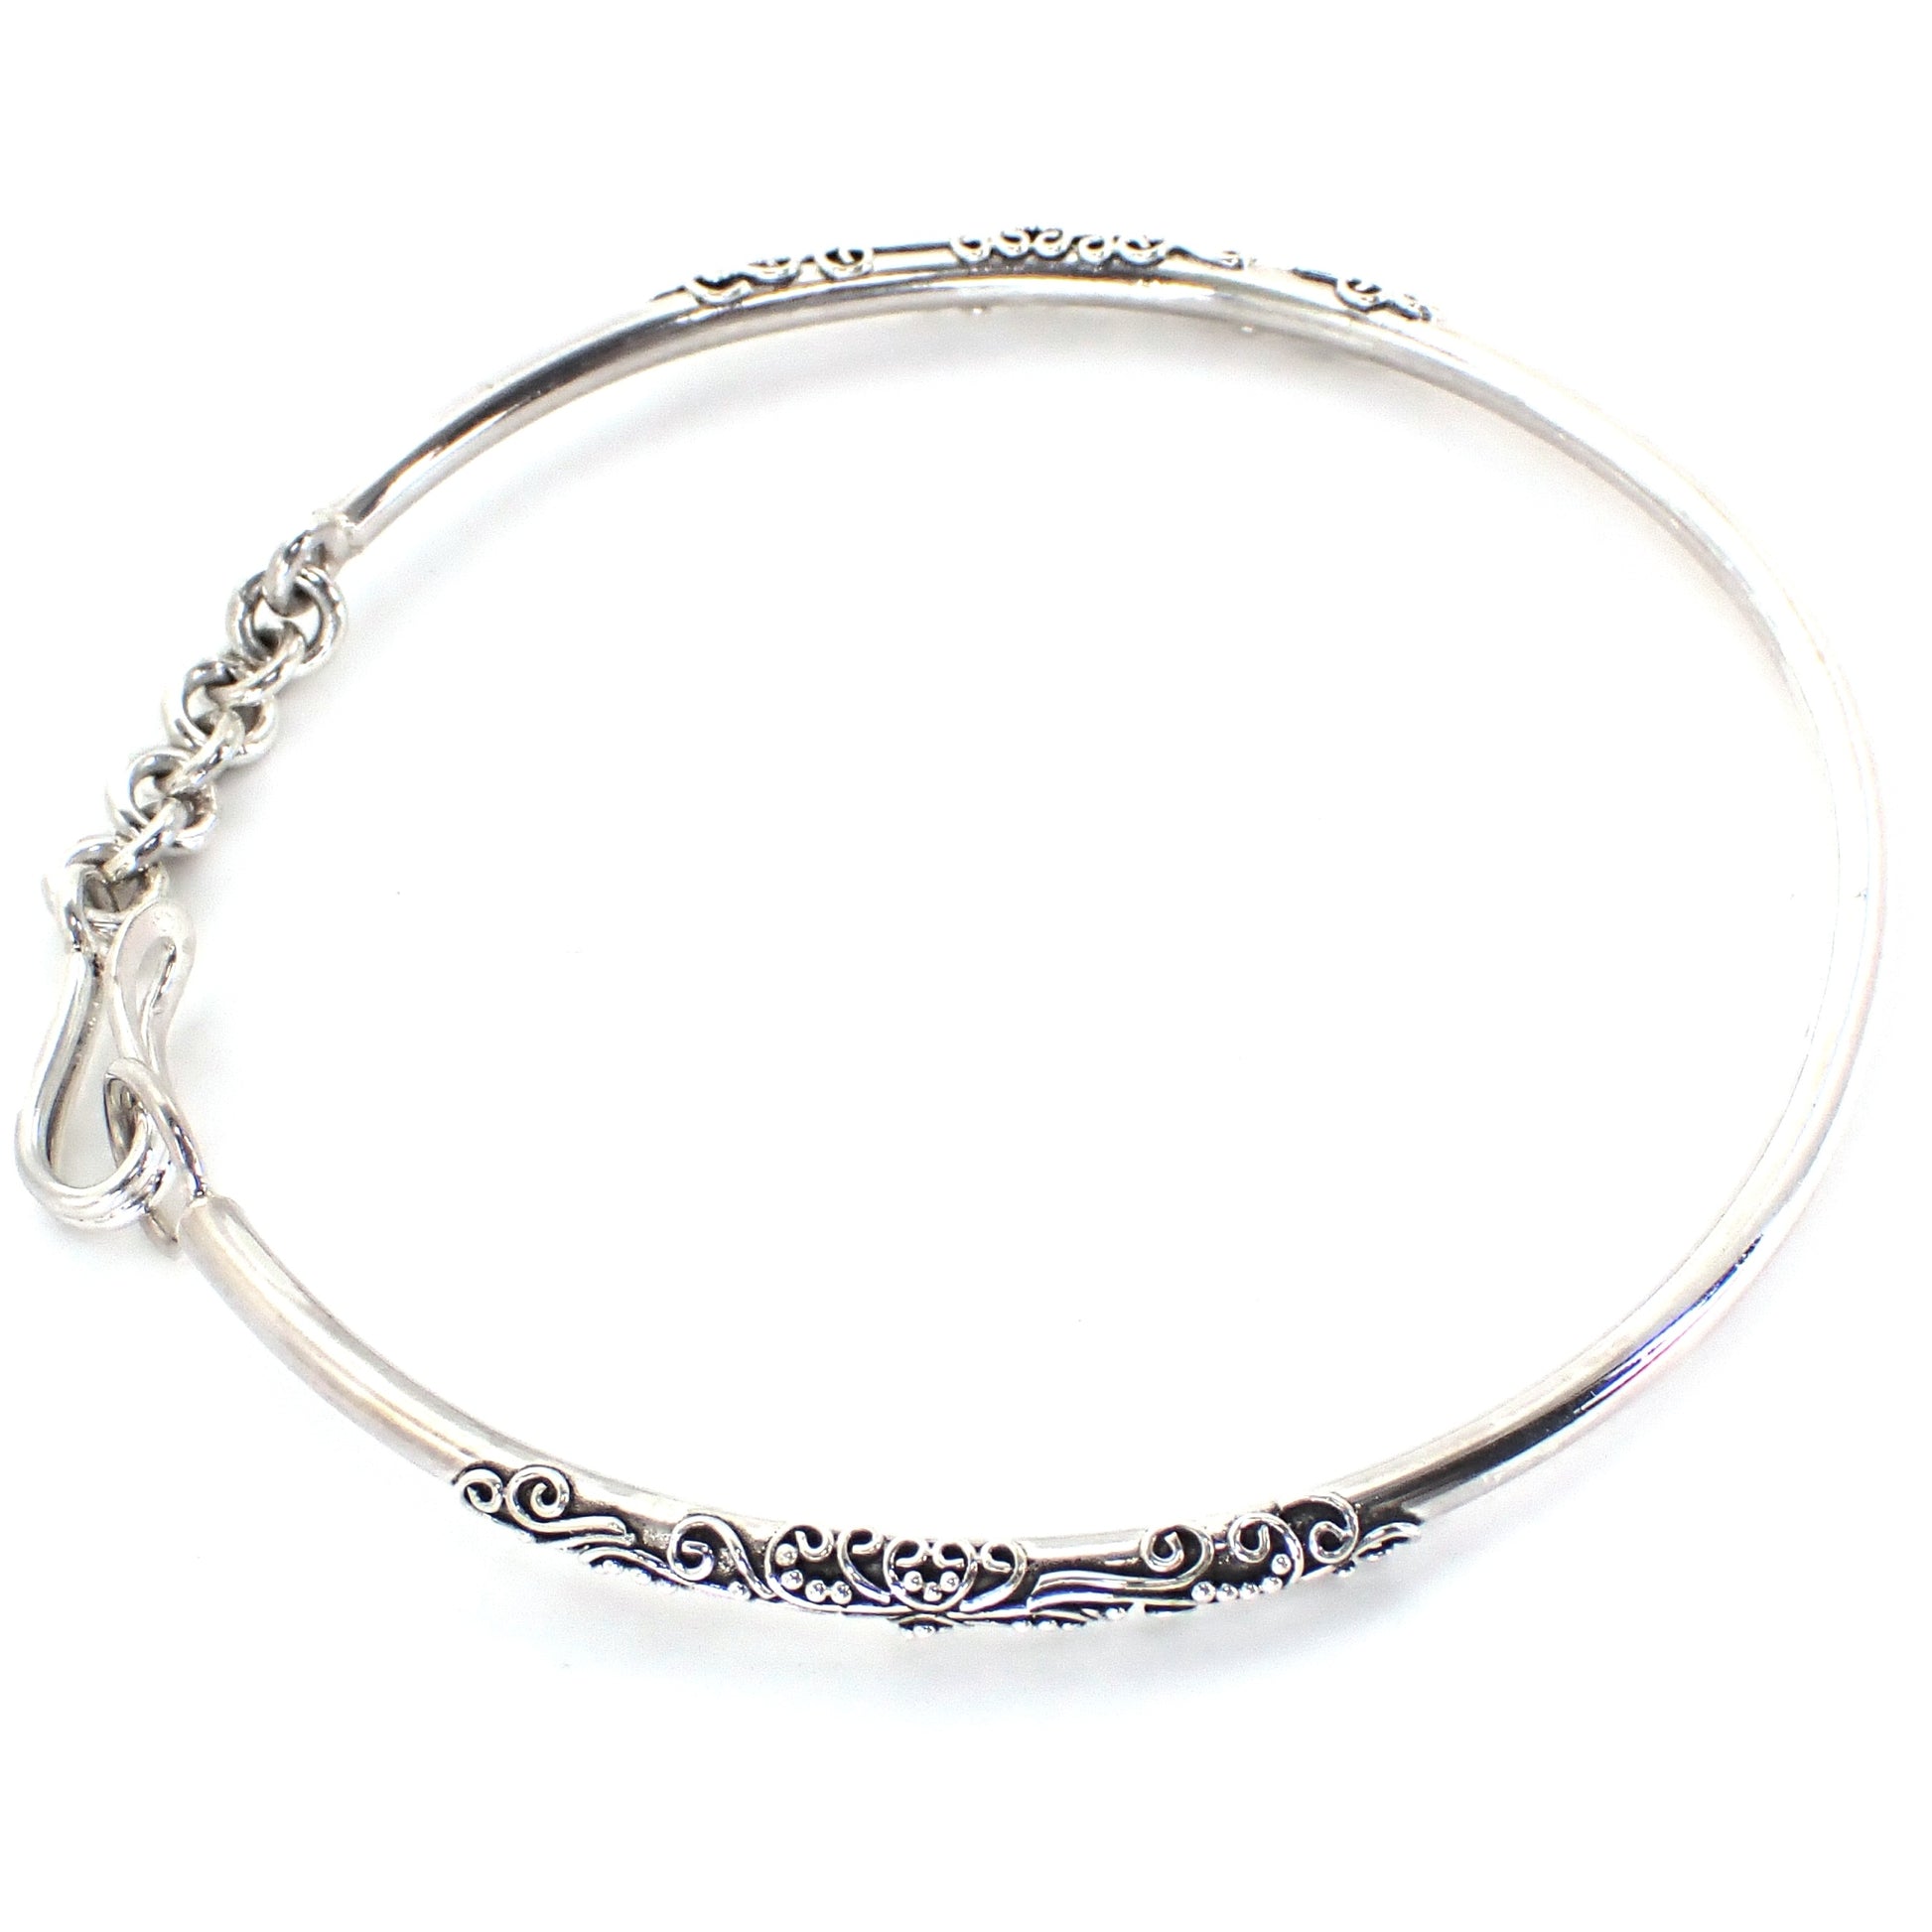 Silver bangle bracelet with a hook clasp.